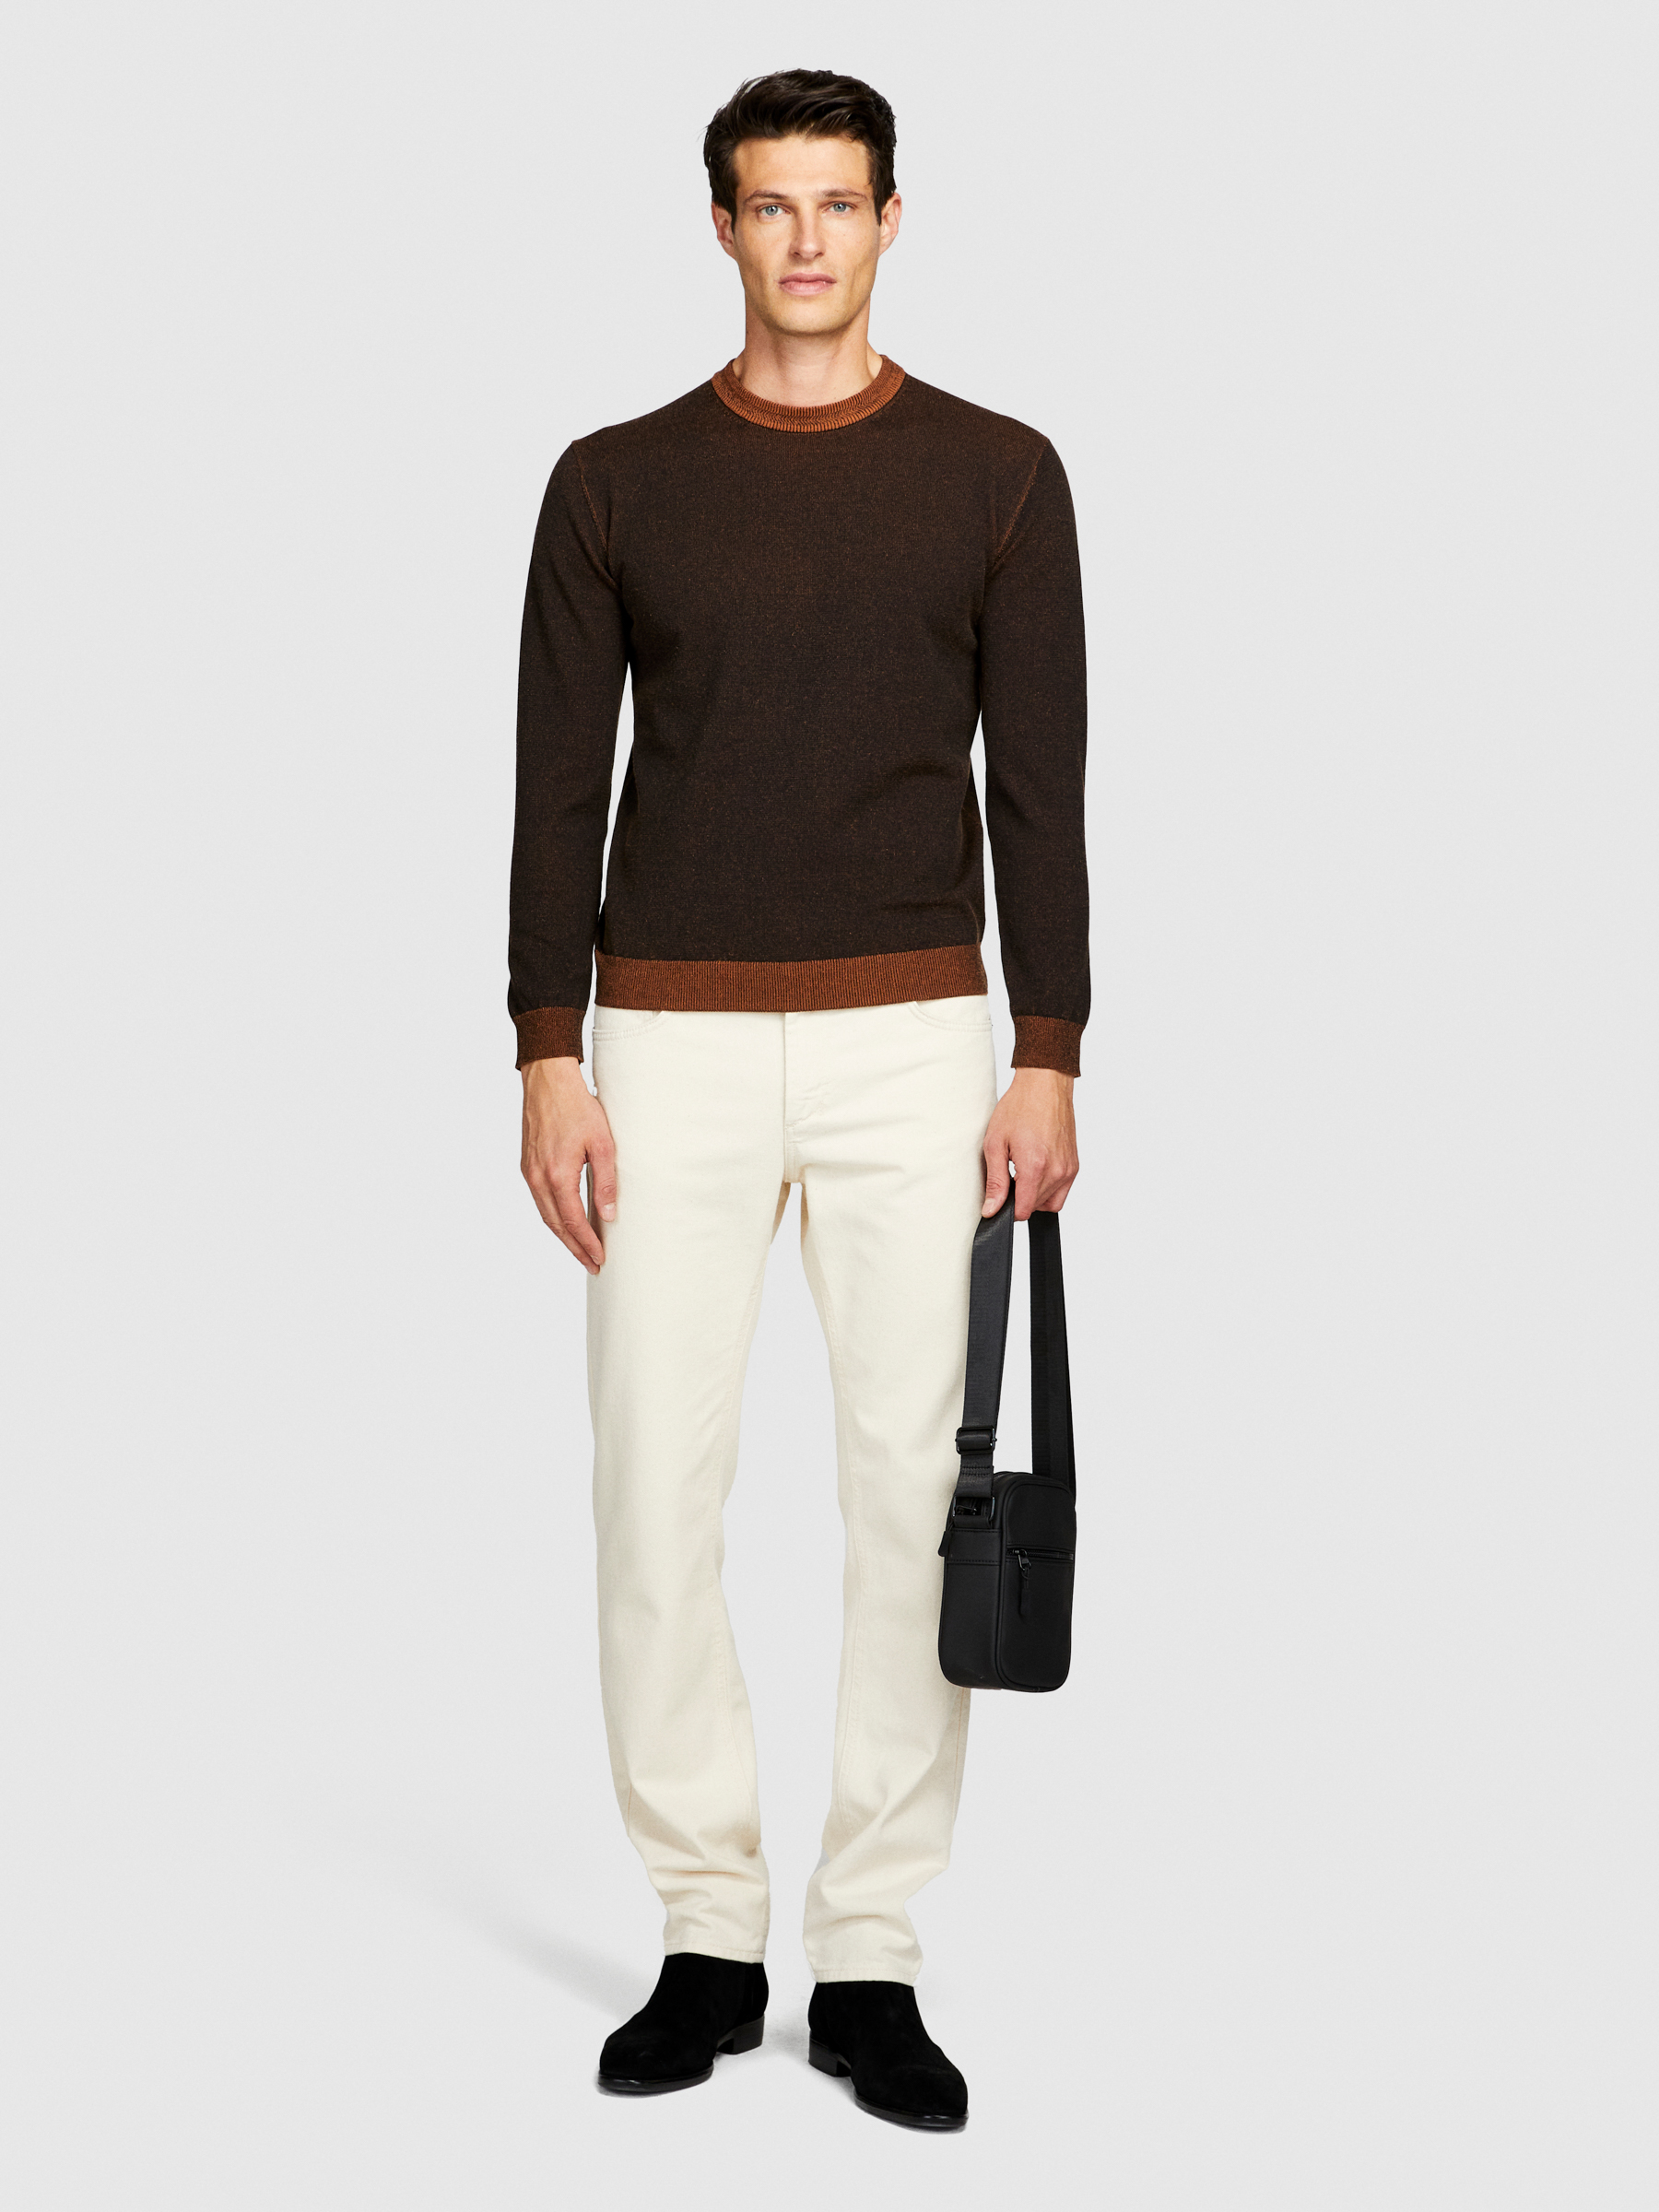 Sisley - Vanise Sweater, Man, Brown, Size: S